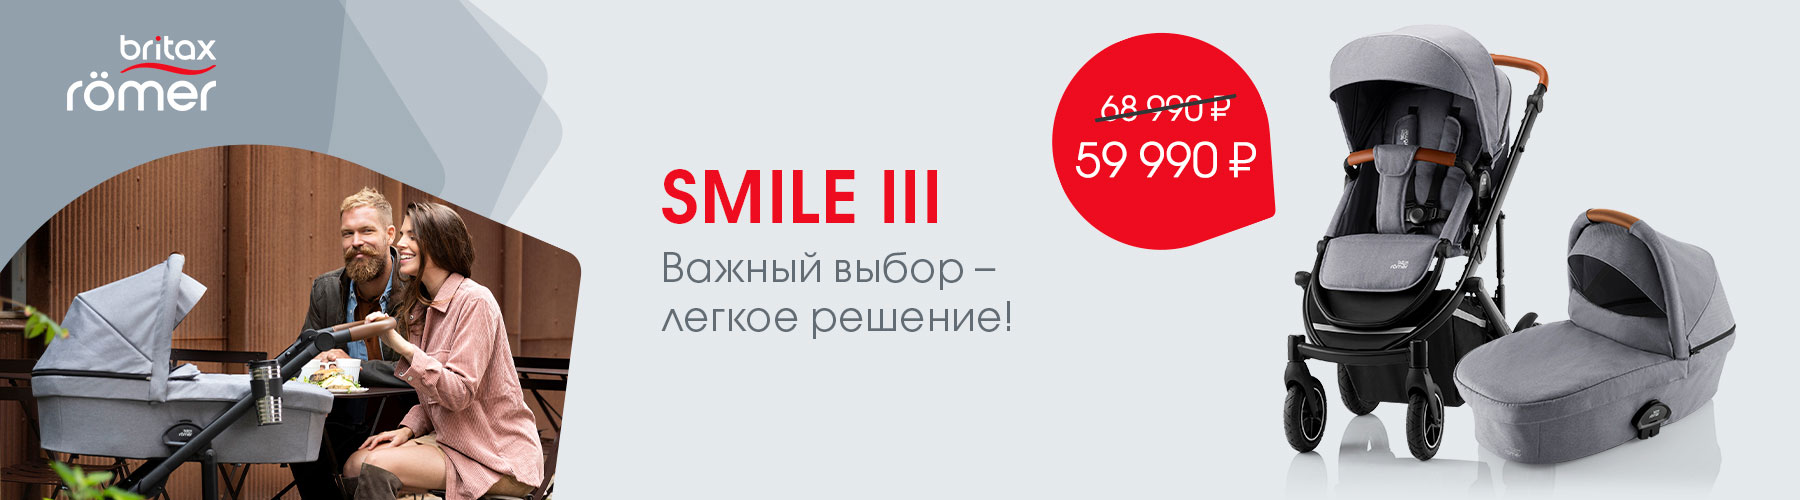 Britax Römer Smile 3 - скидка 13%